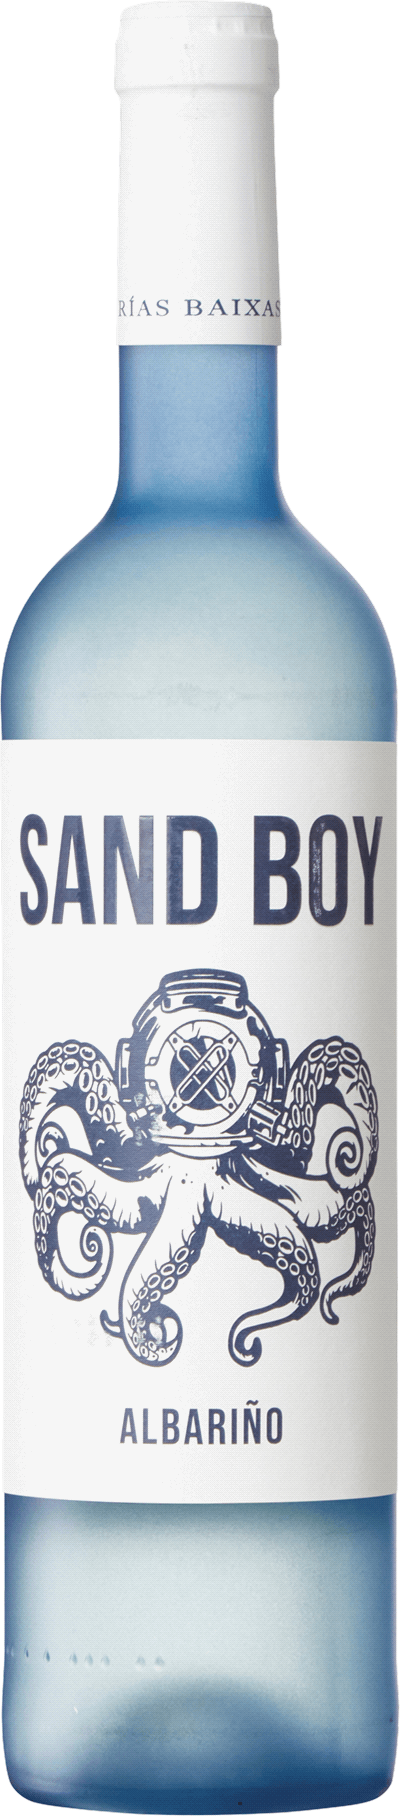 Sand Boy Albariño